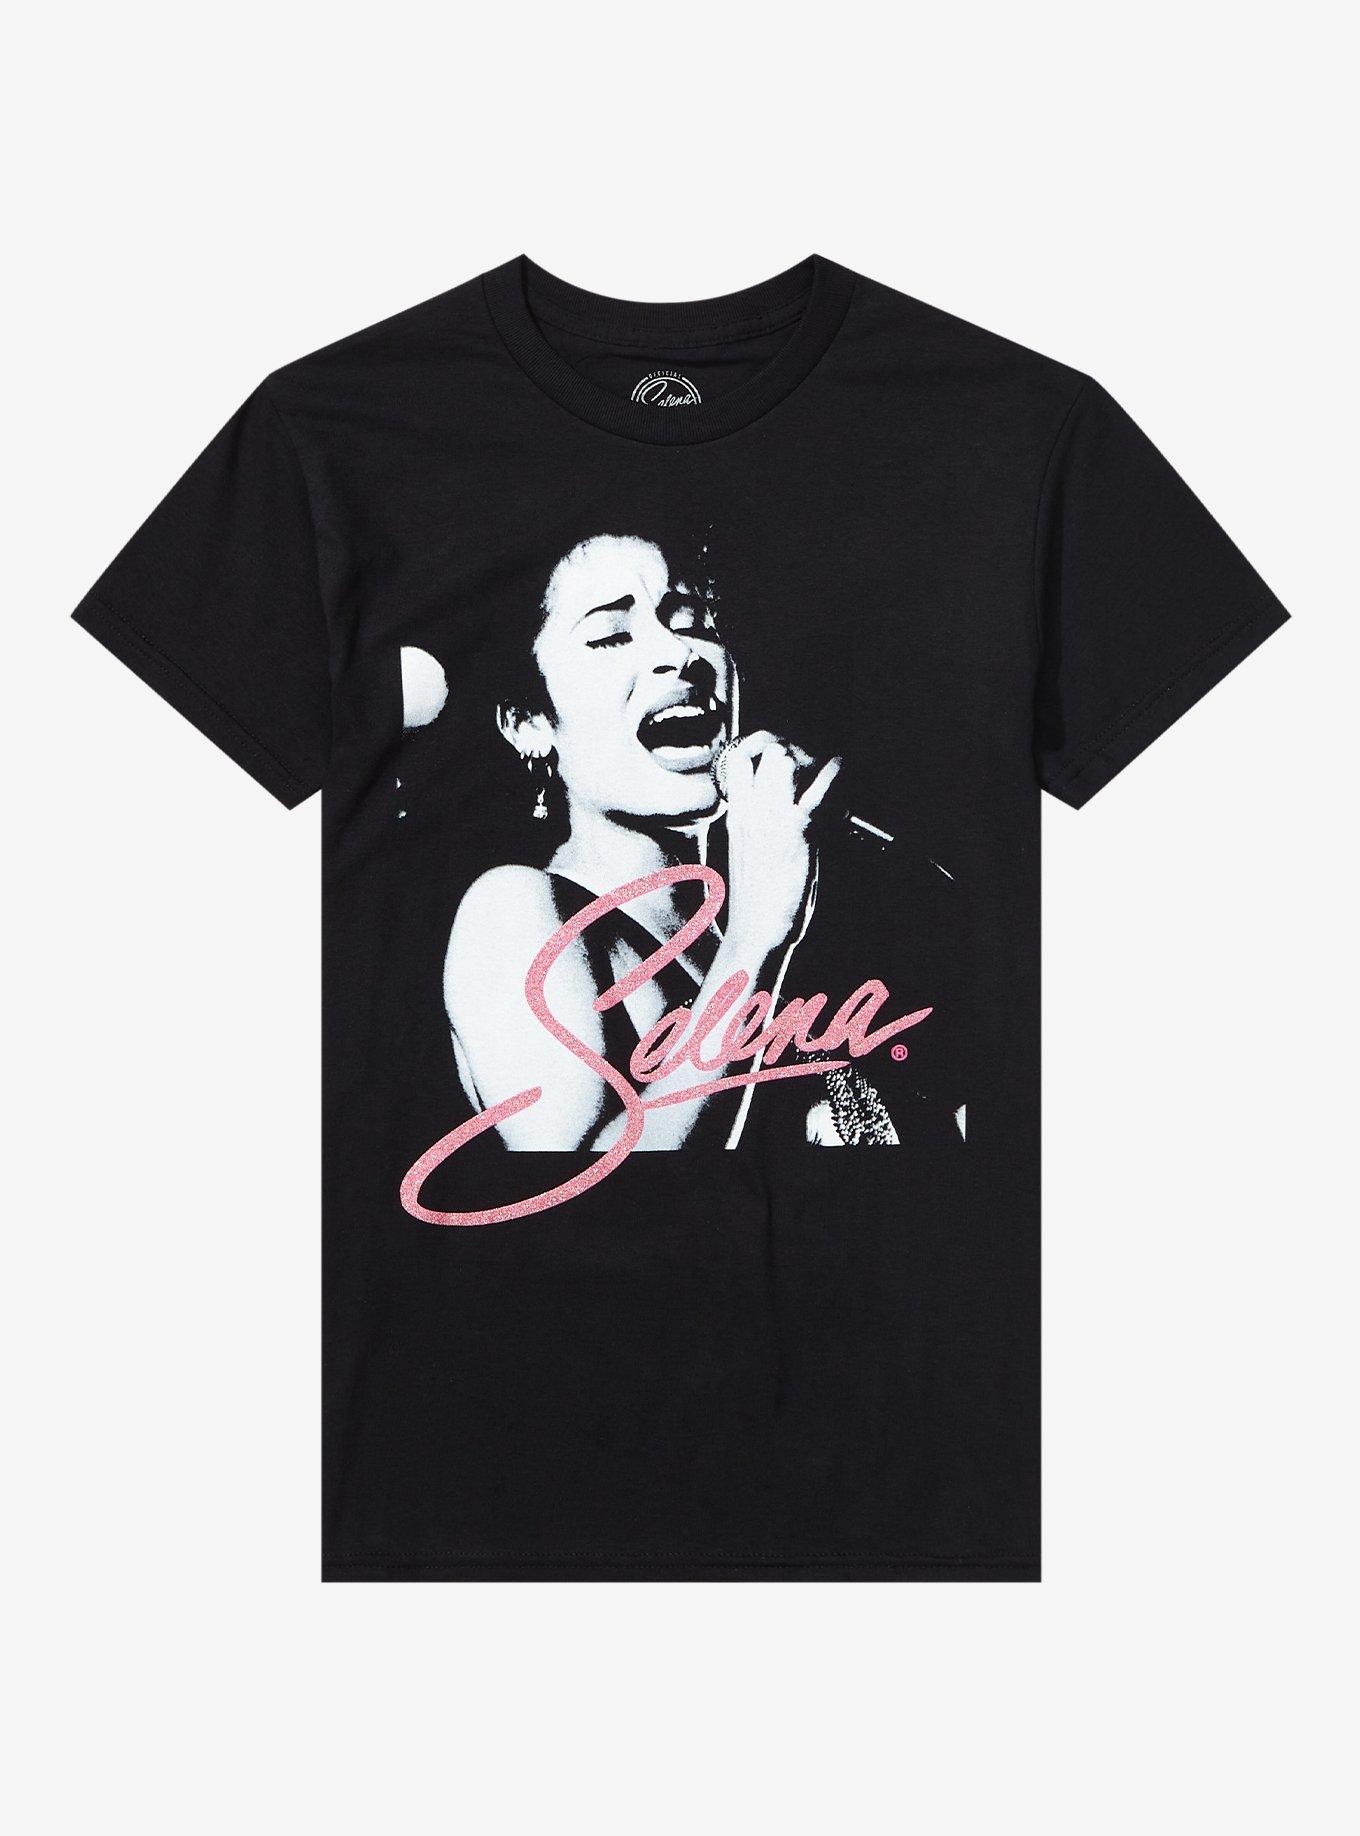 Selena quintanilla shirt - Kingteeshop